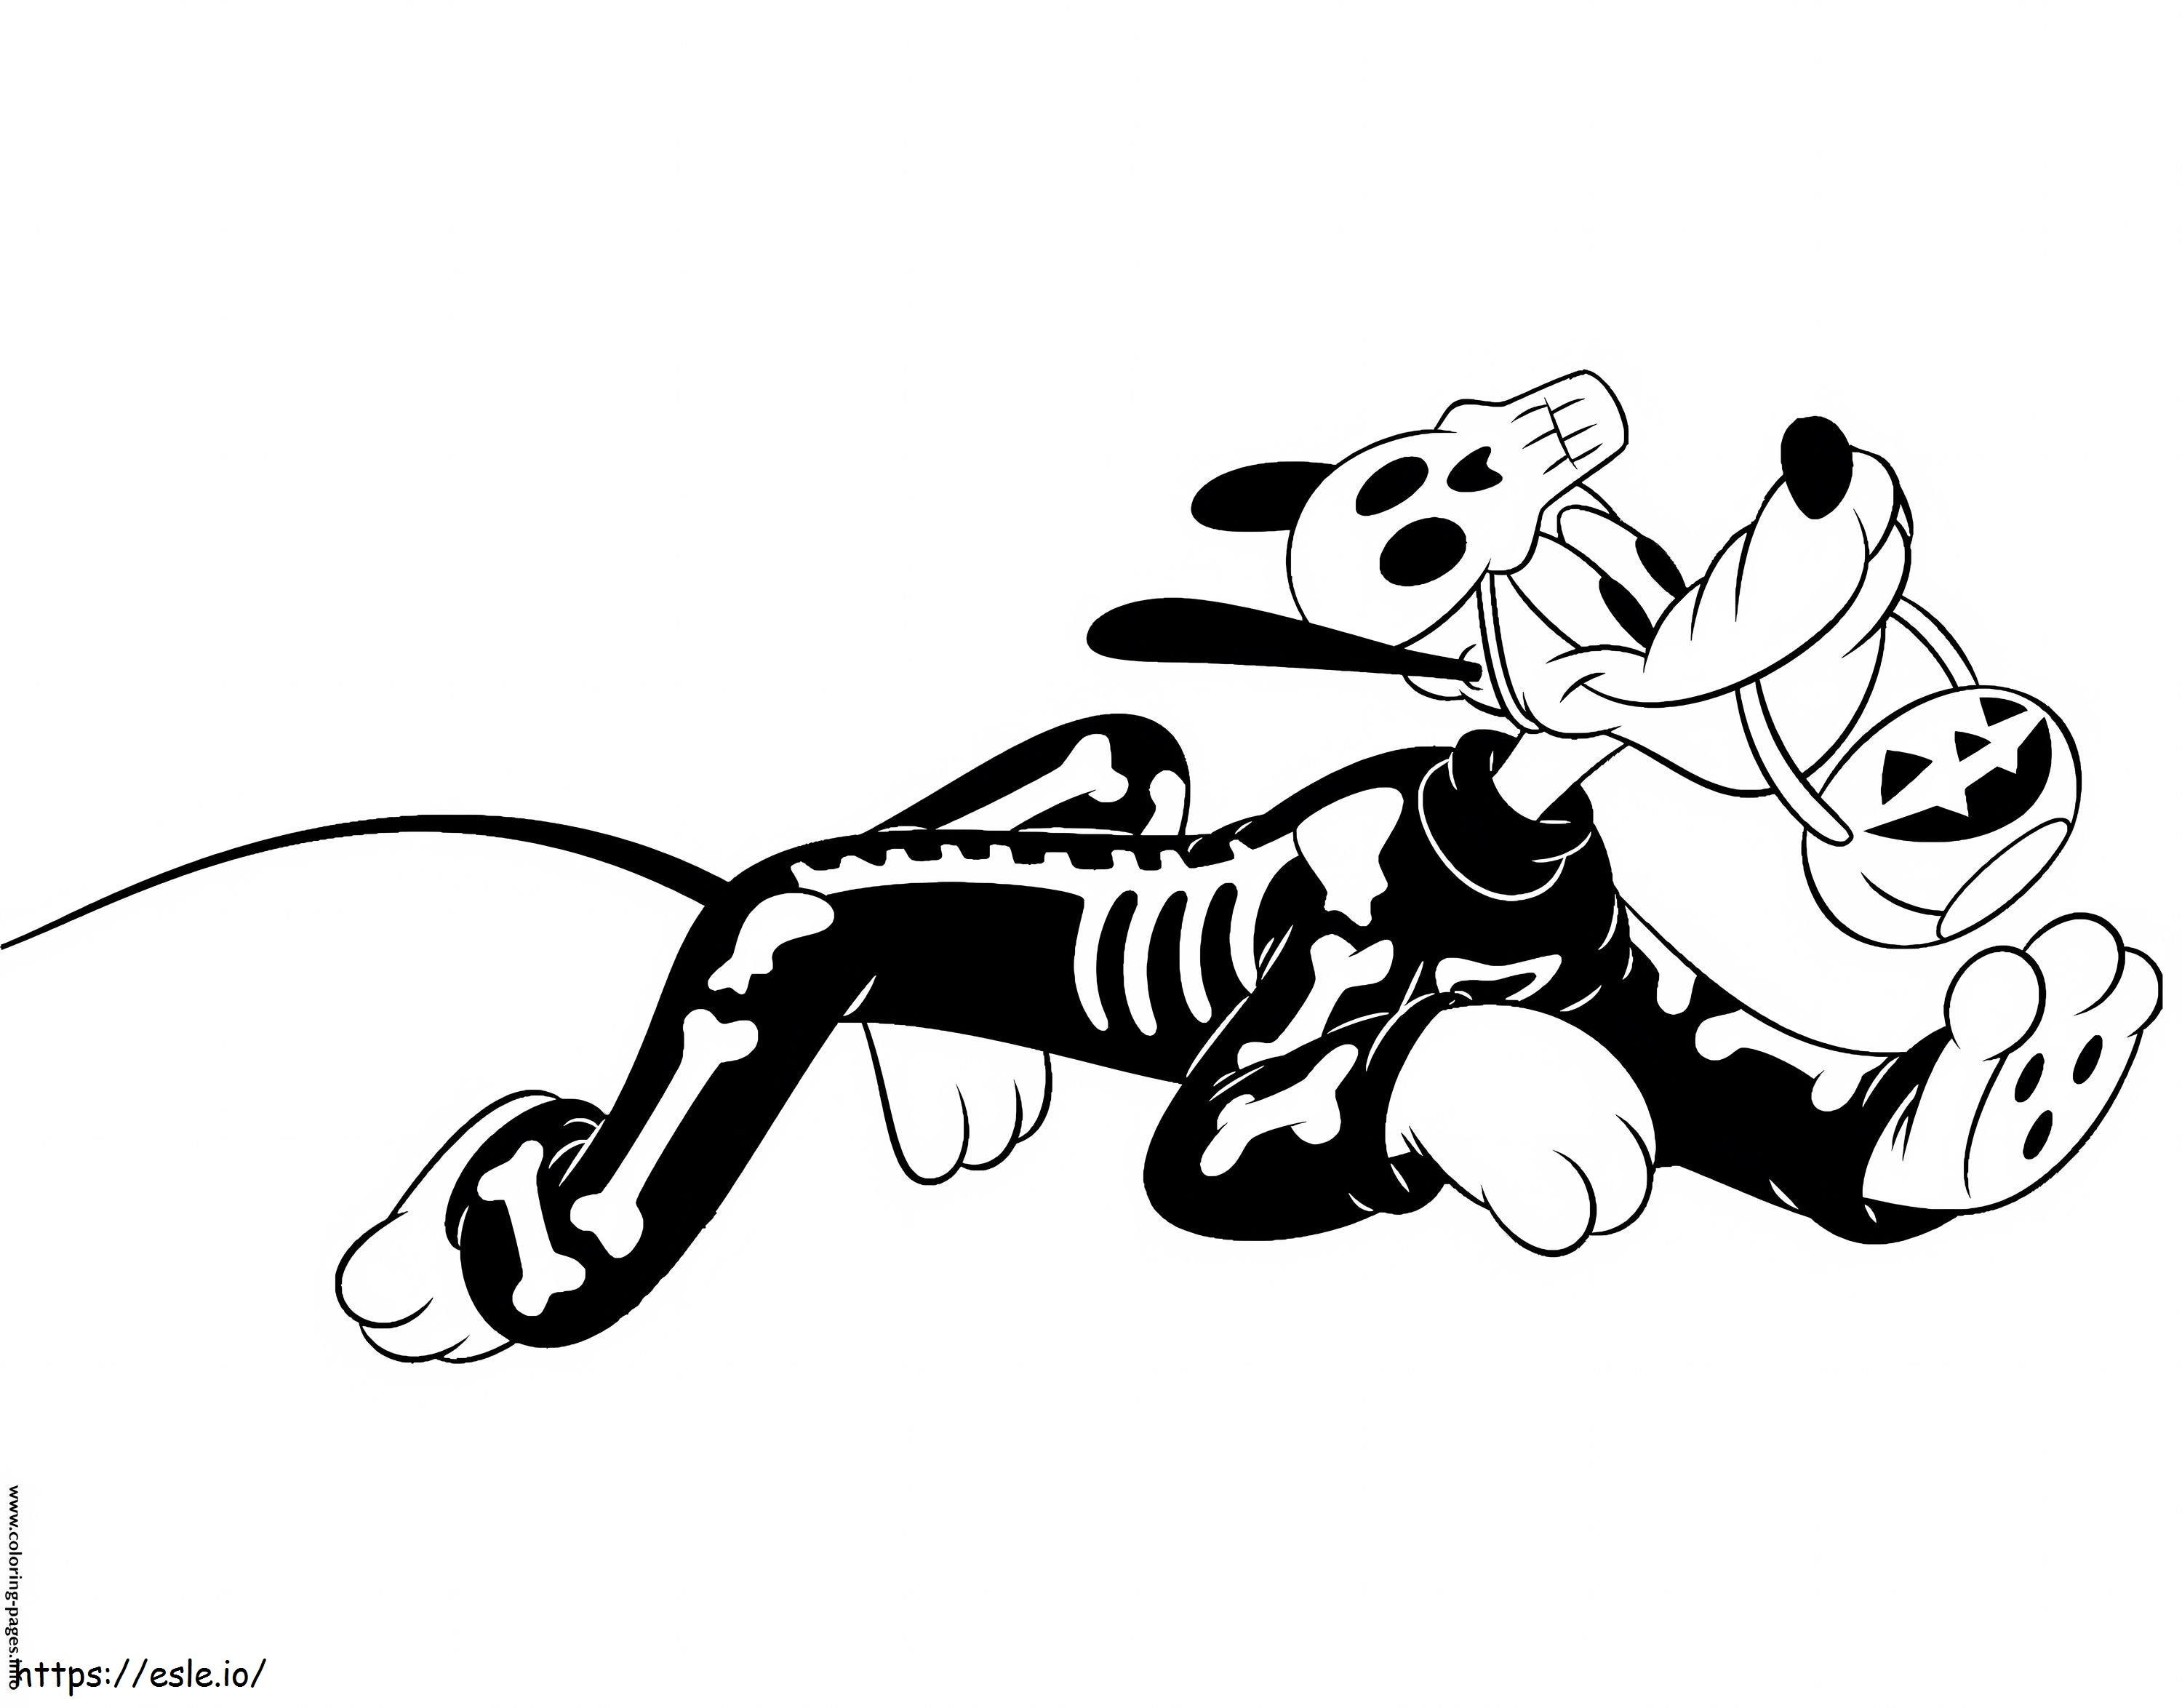 1540548514 1473956333Pluto As A Skeleton Disney Halloween E1600735123897 coloring page